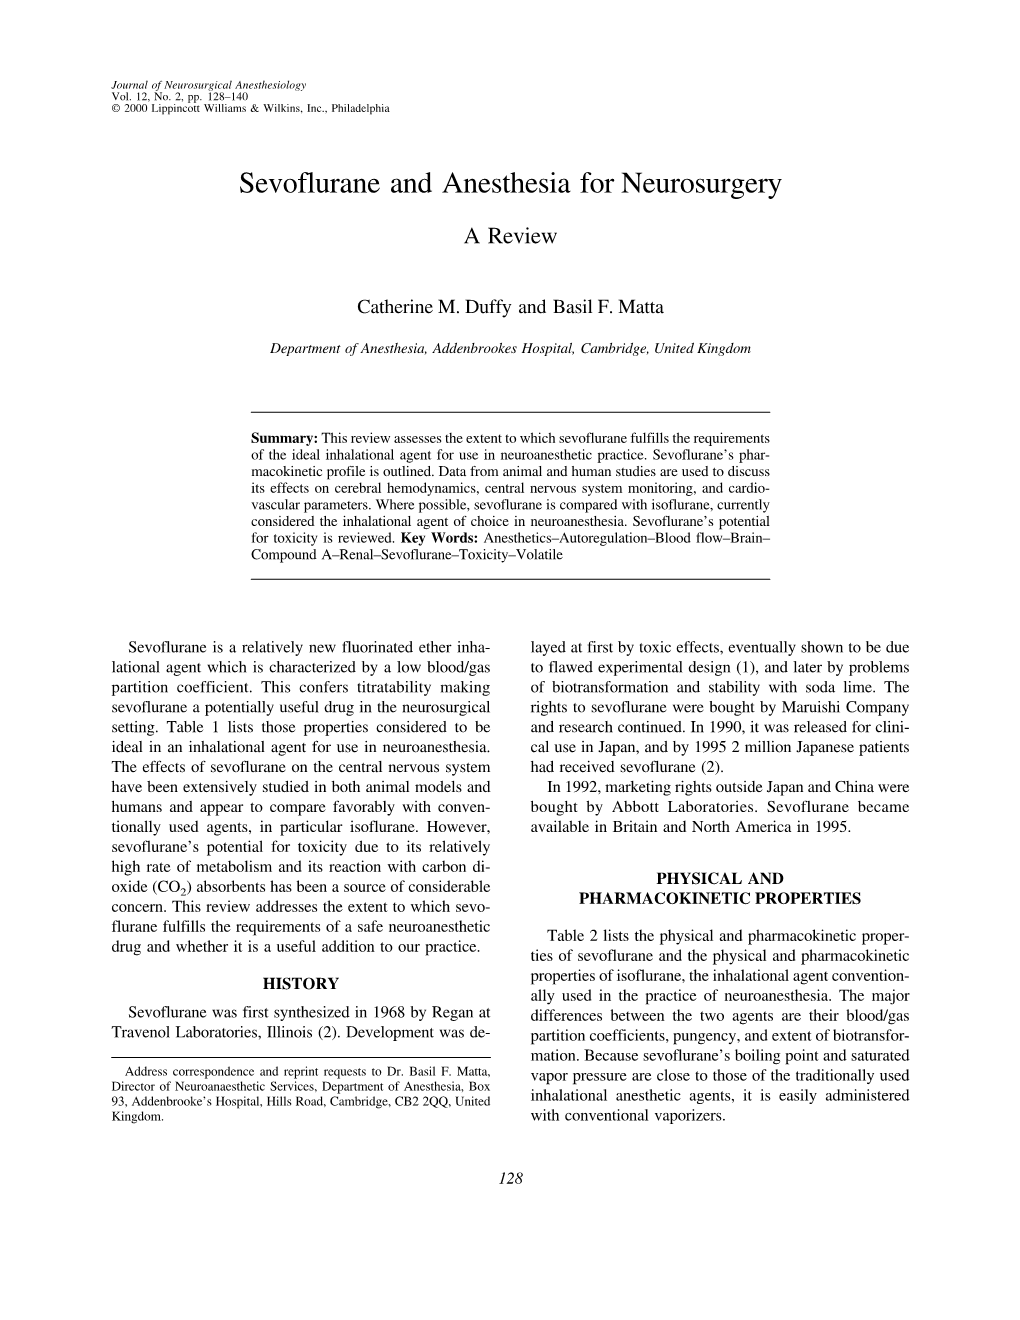 Sevoflurane and Anesthesia for Neurosurgery